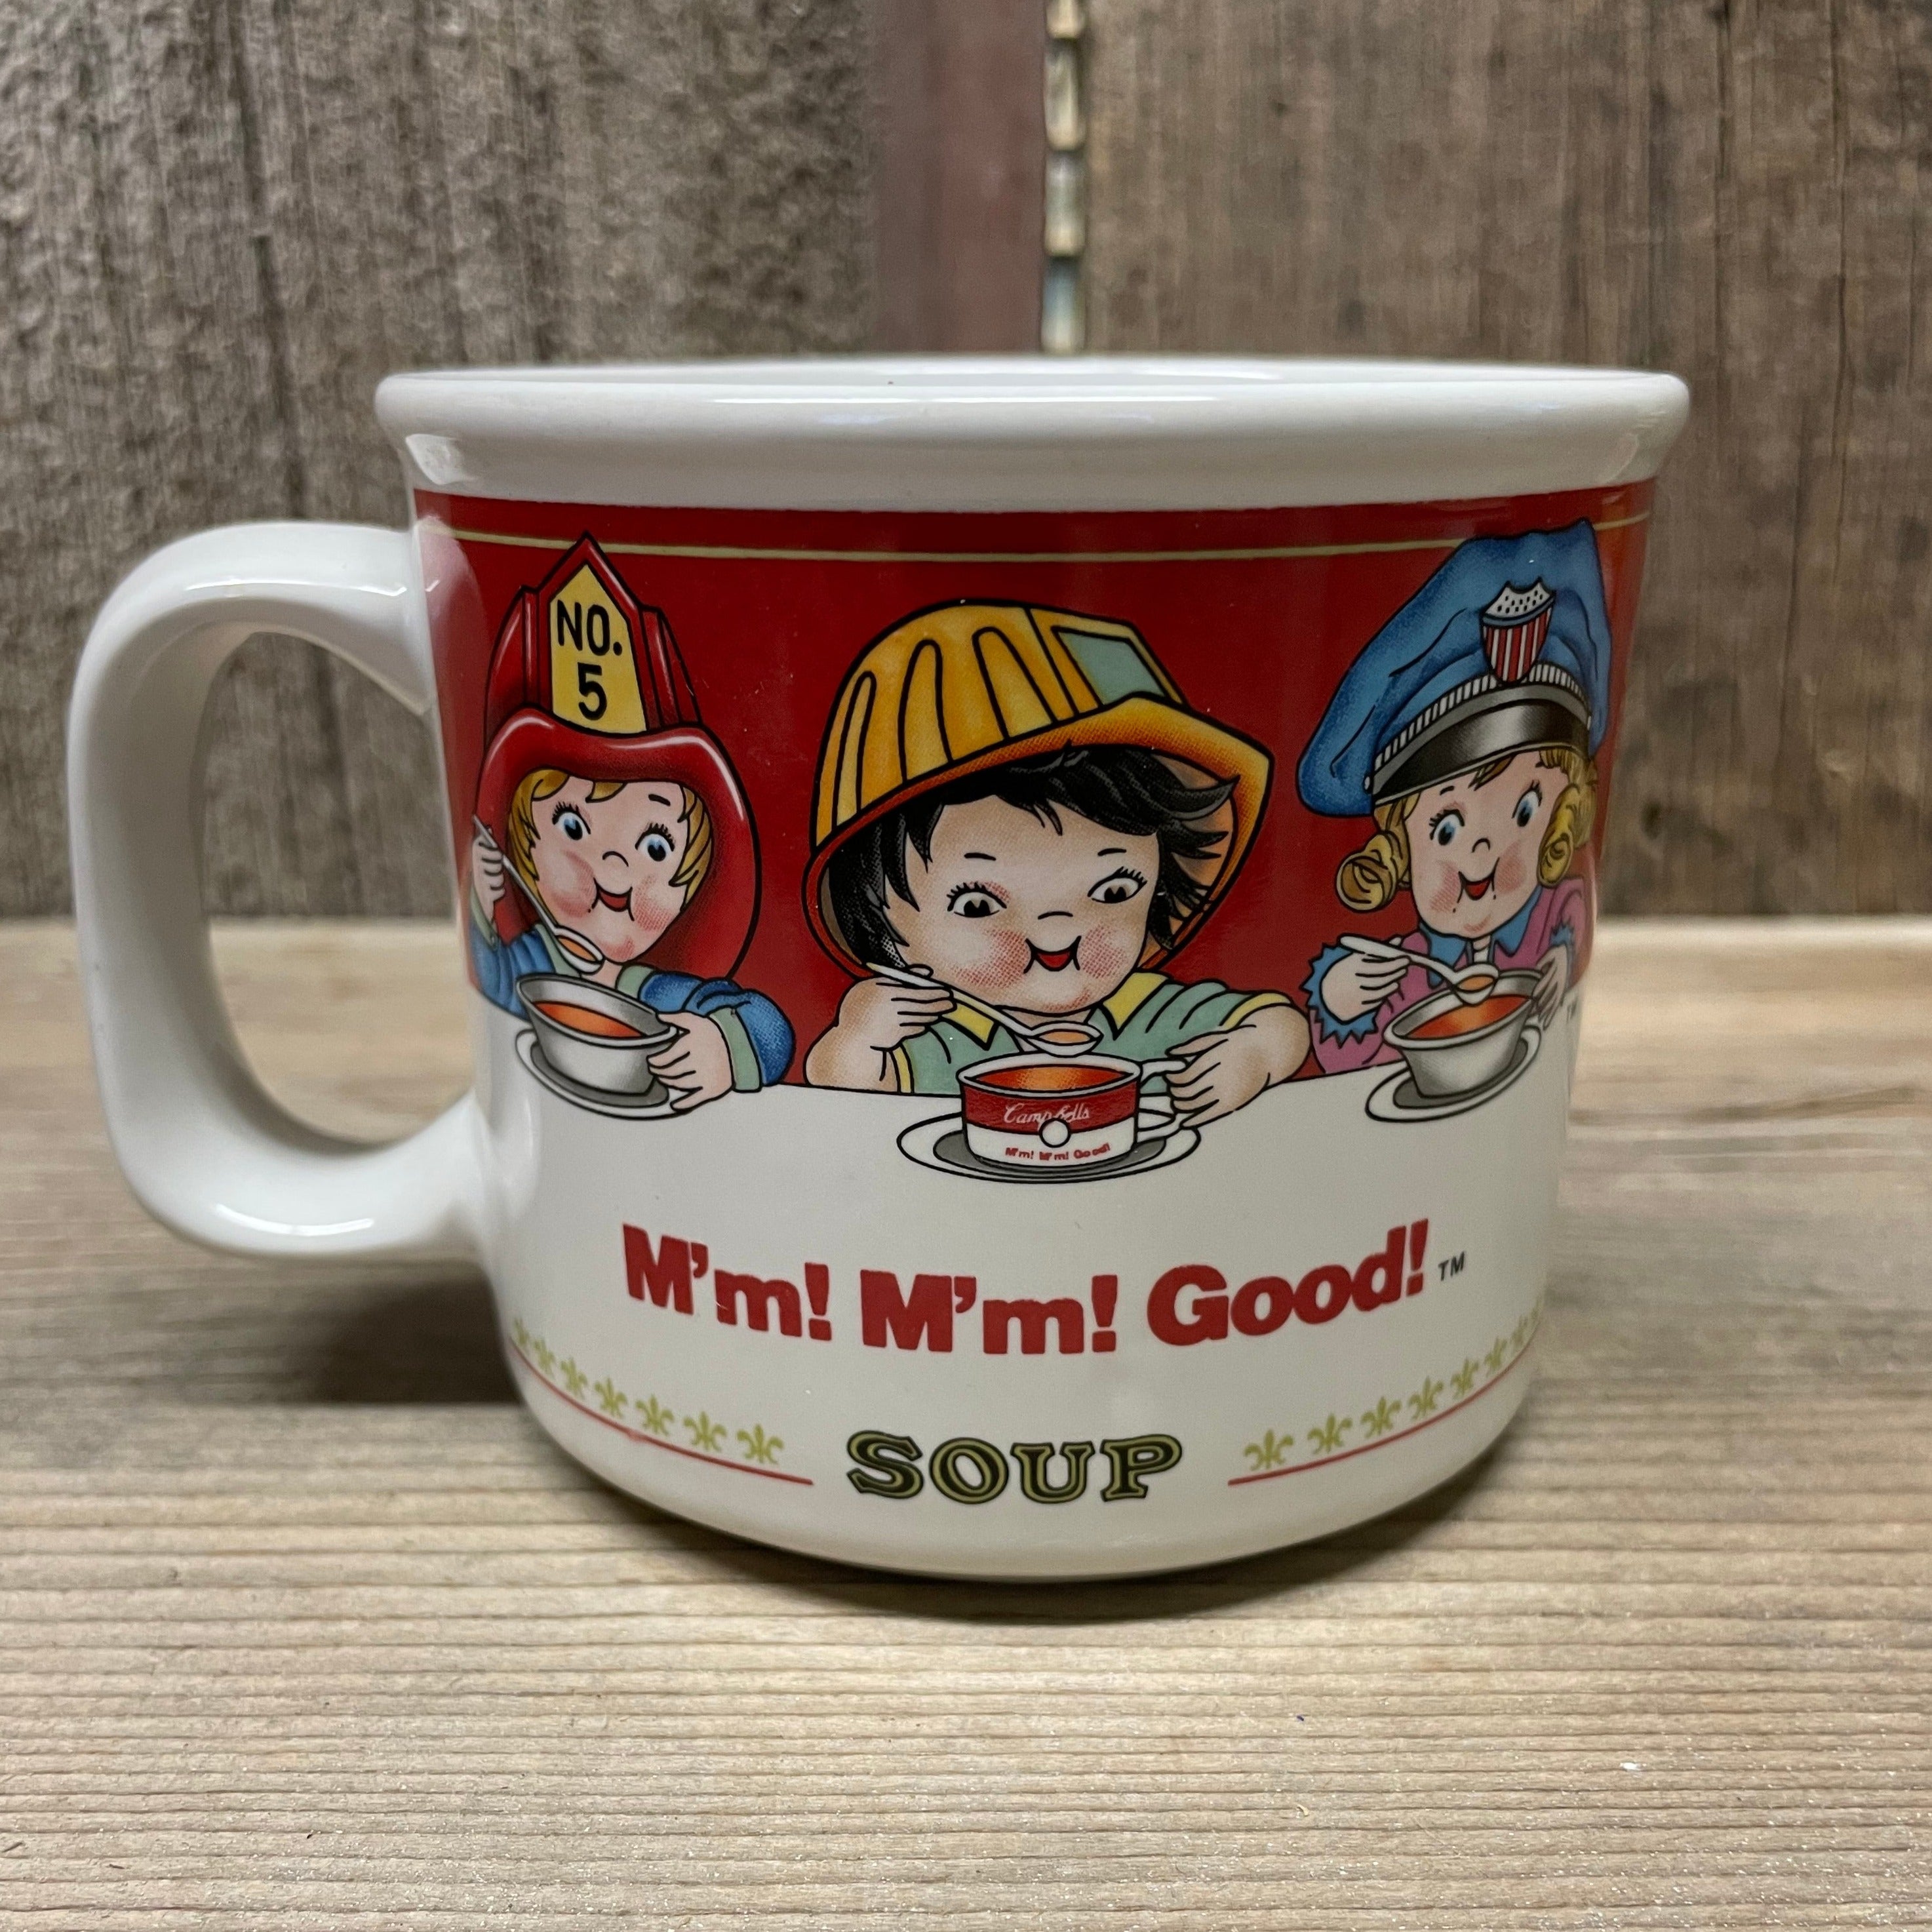 Campbell's Soup Mug-1993